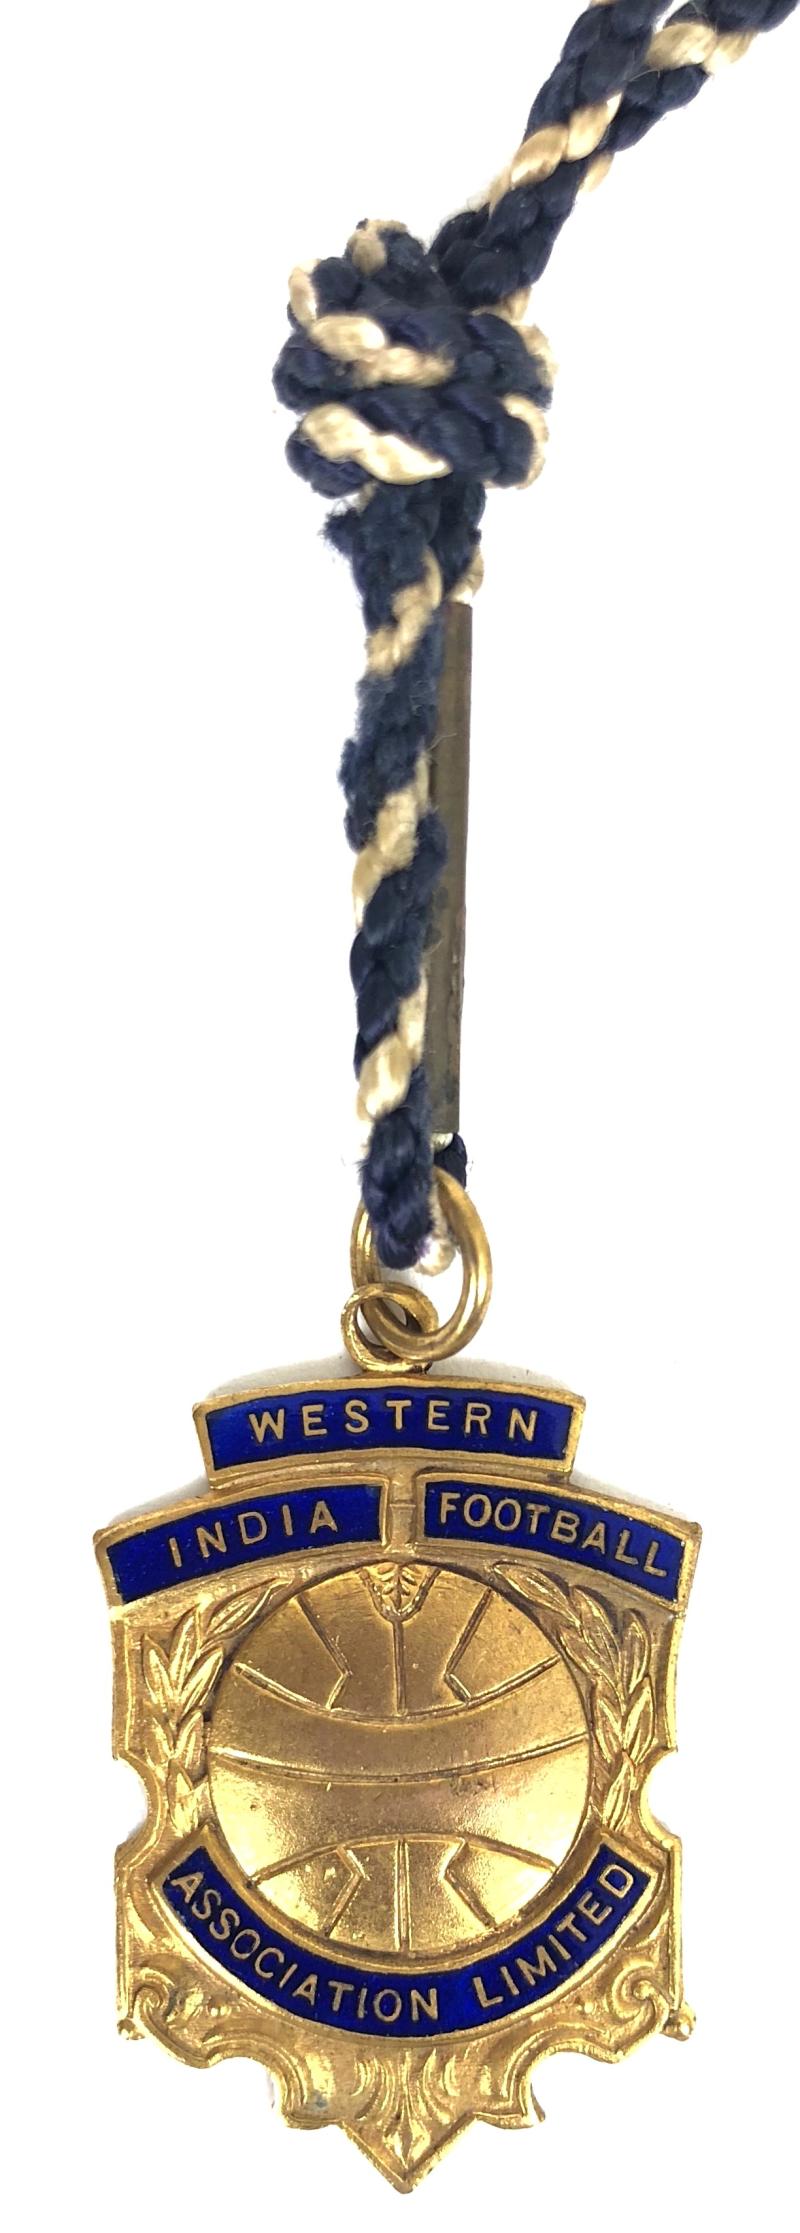 Western India Football Association Limited WIFA membership badge Jewellers Ld Bombay